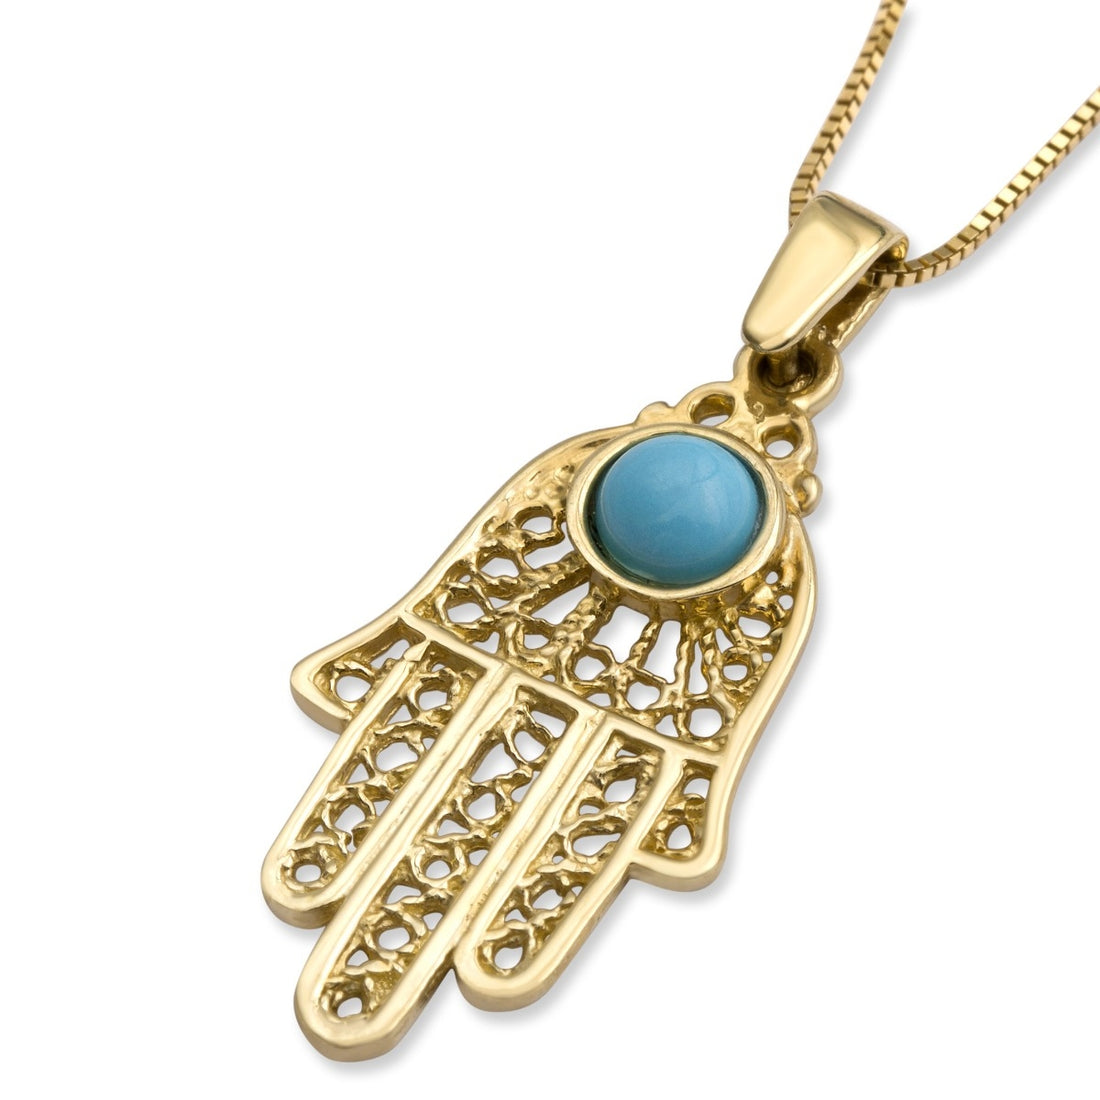 Large 14K Yellow Gold Filigree Hamsa Pendant Necklace With Turquoise Stone